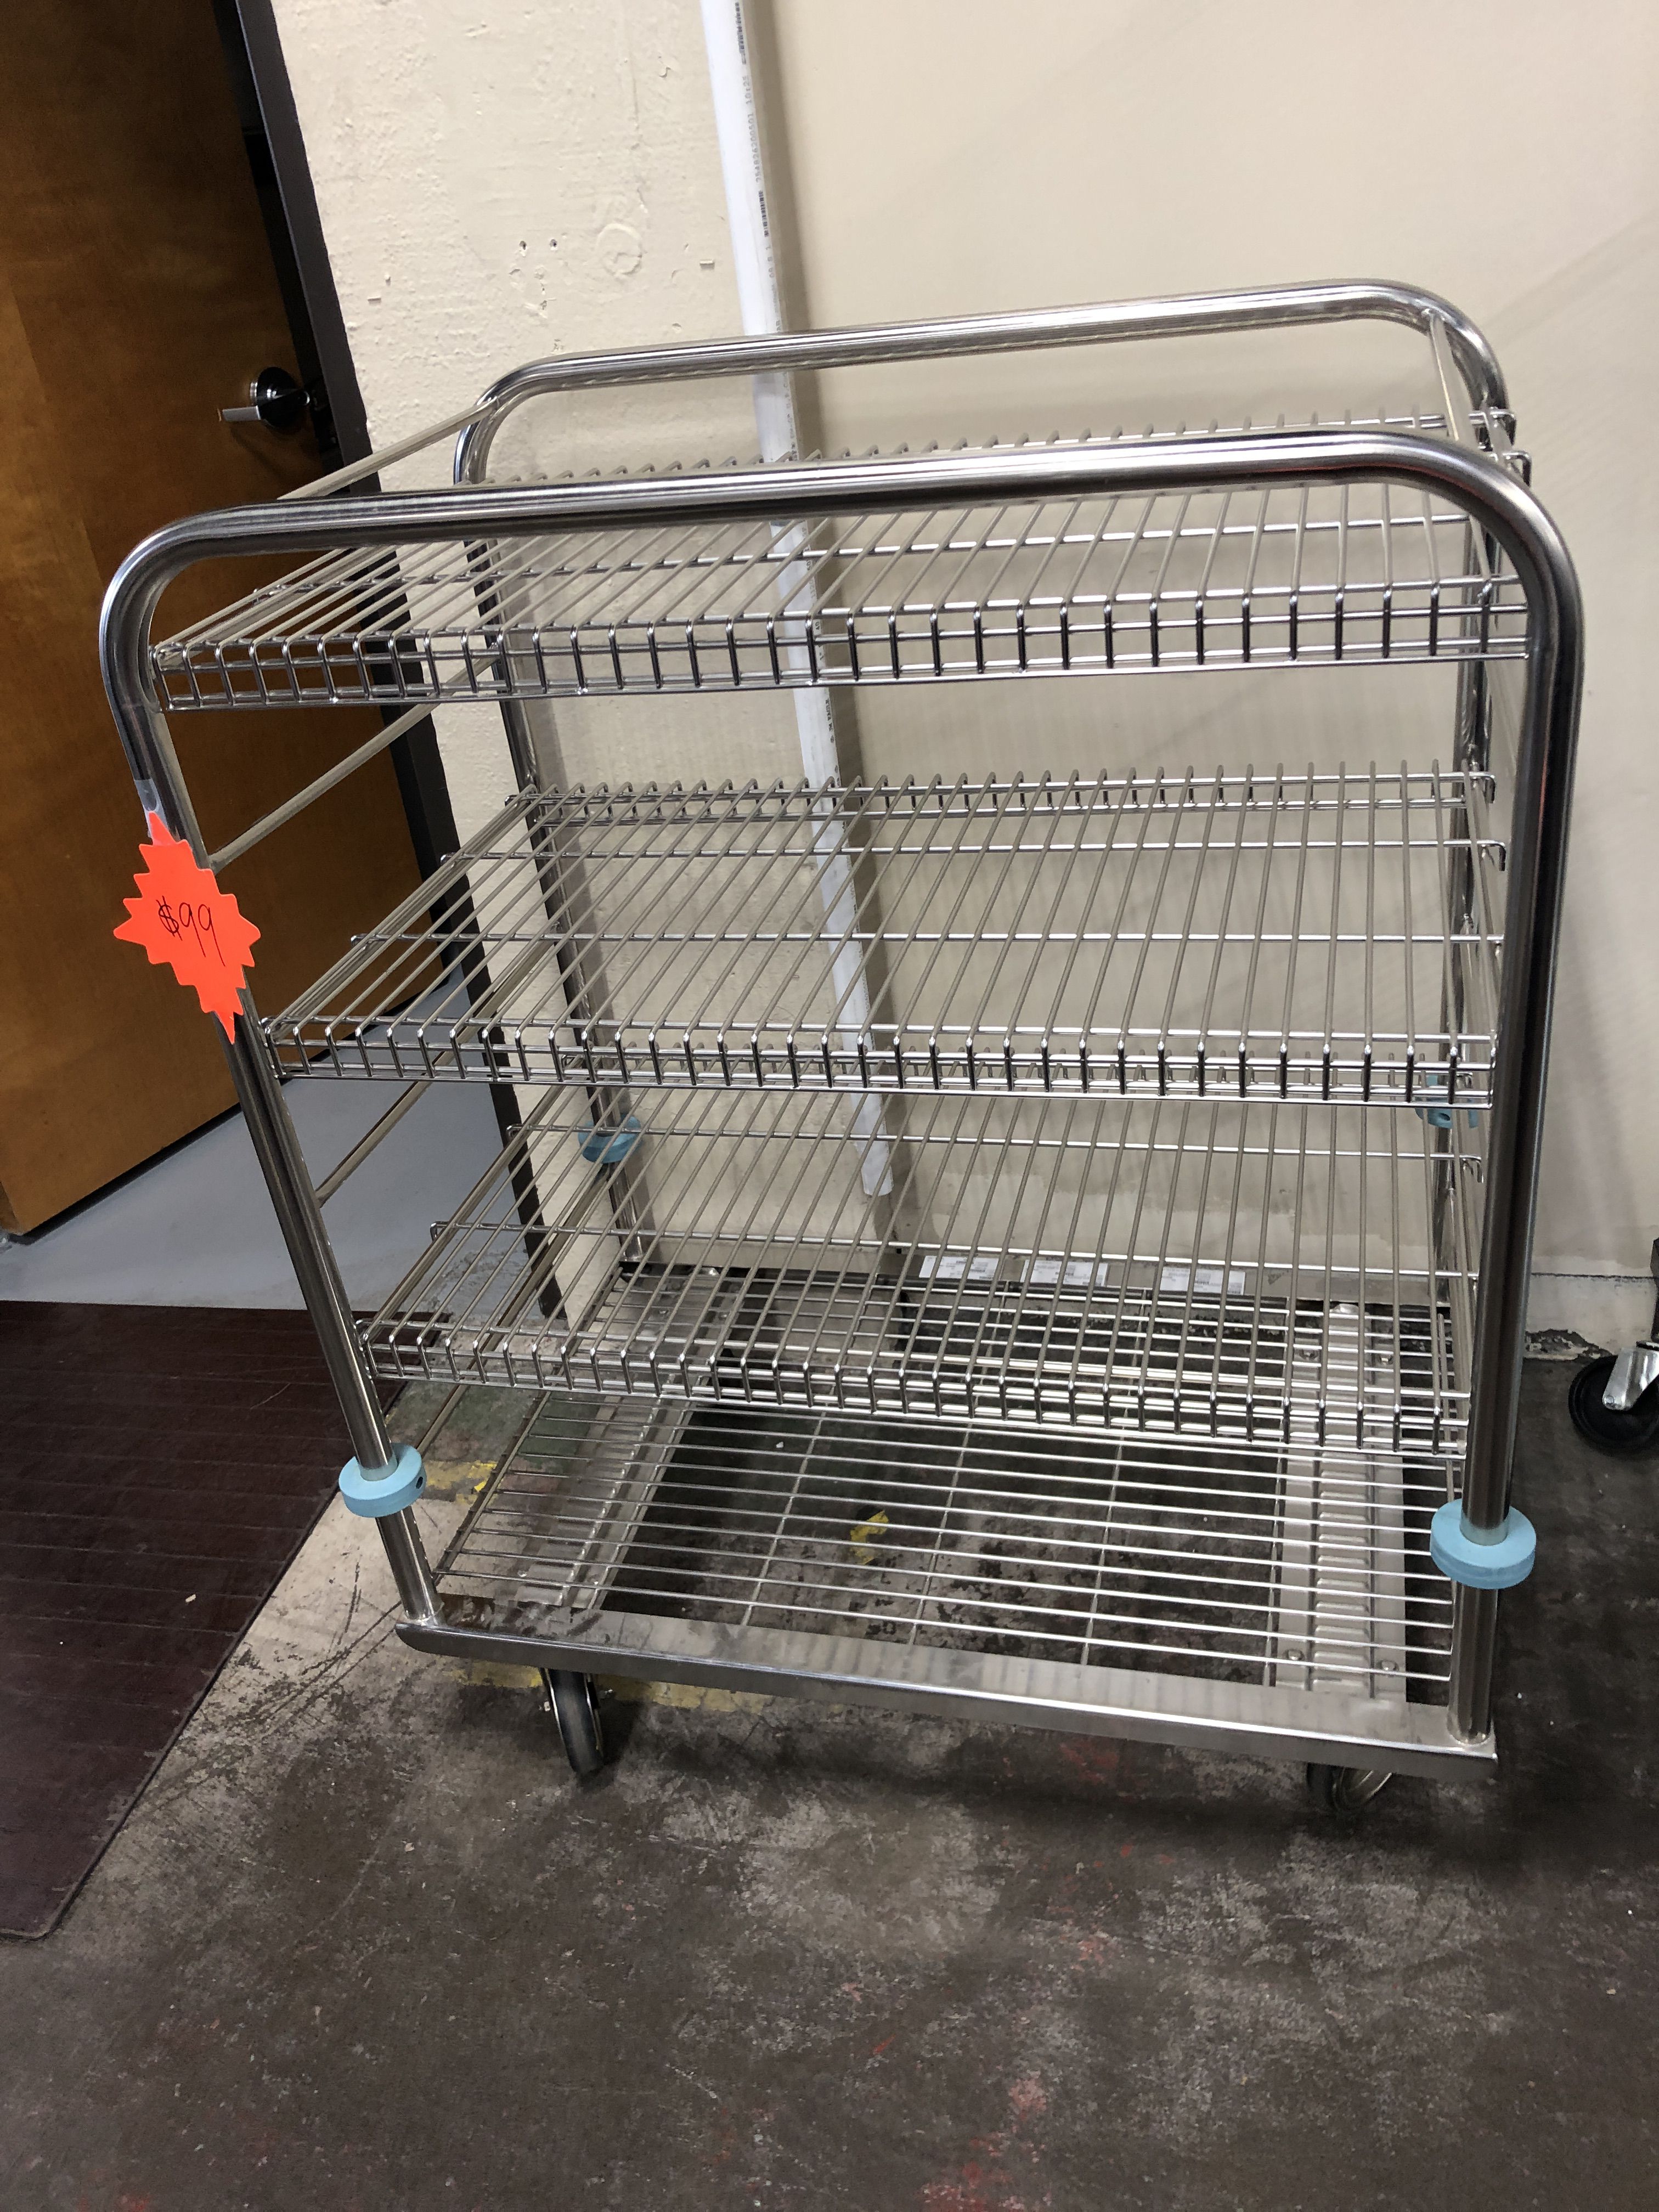 Metro Kitchen Carts on Wheels $99